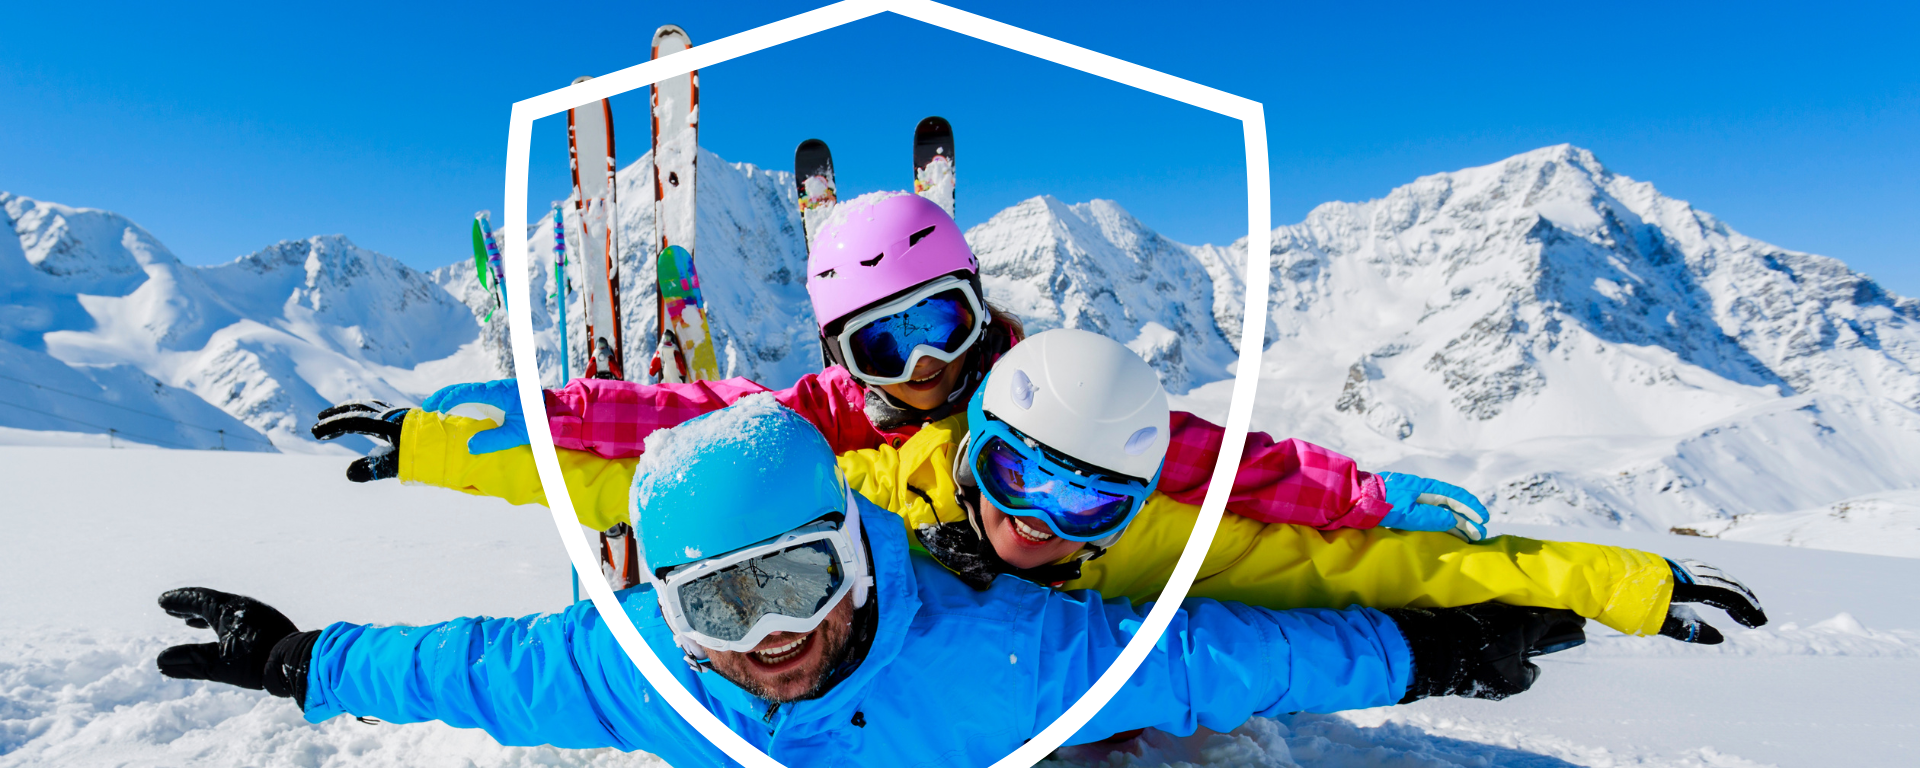 Travel Insurance for Skiing